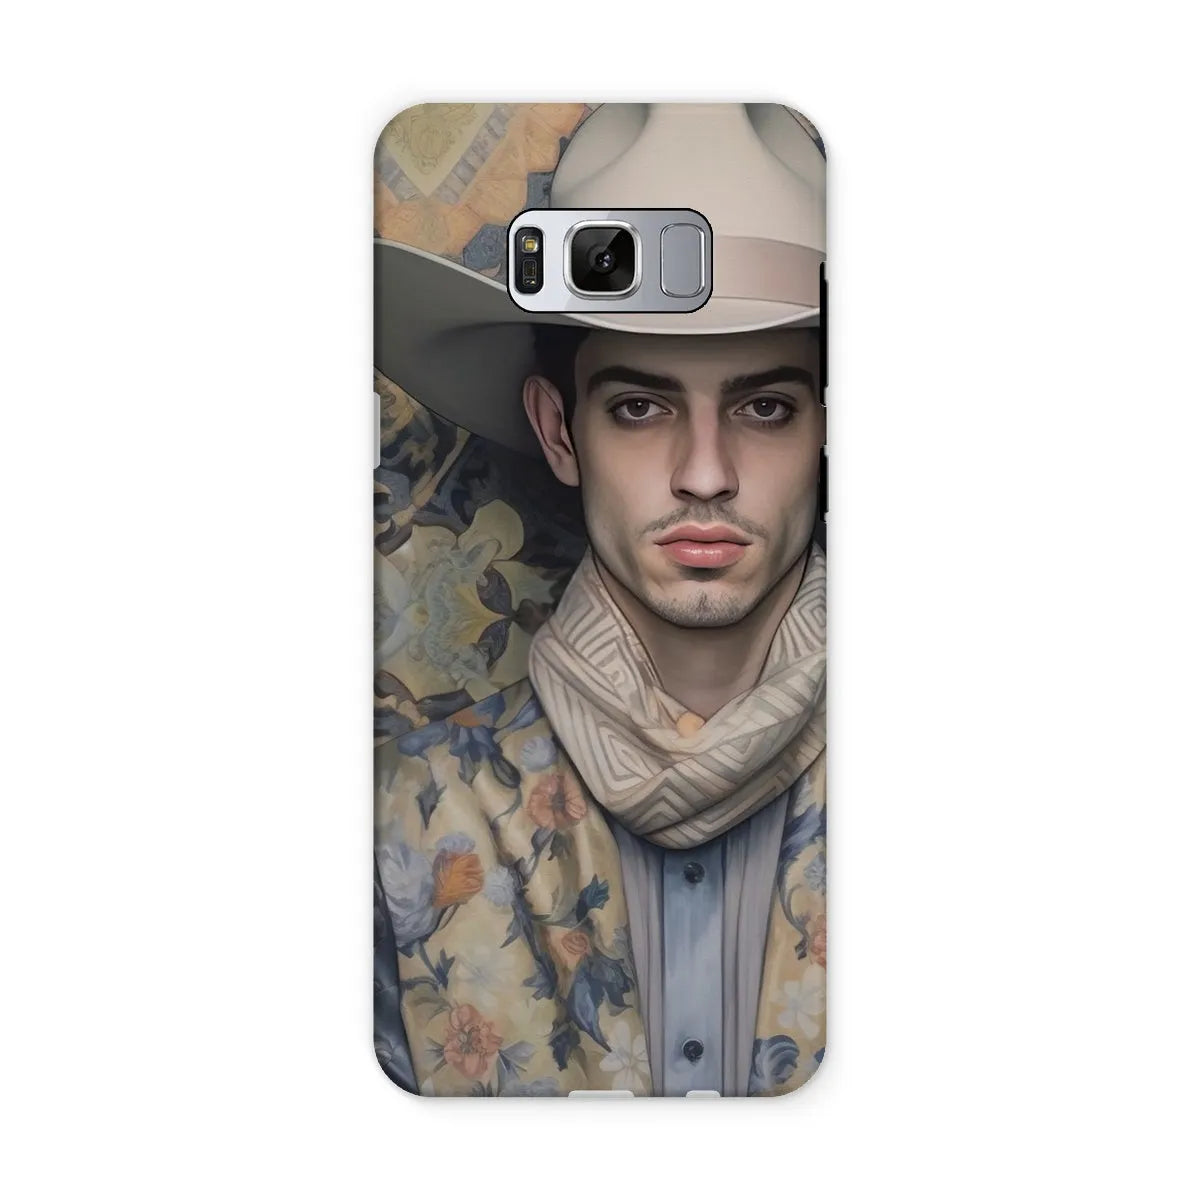 Farzad The Gay Cowboy - Dandy Gay Men Art Phone Case - Samsung Galaxy S8 / Matte - Mobile Phone Cases - Aesthetic Art